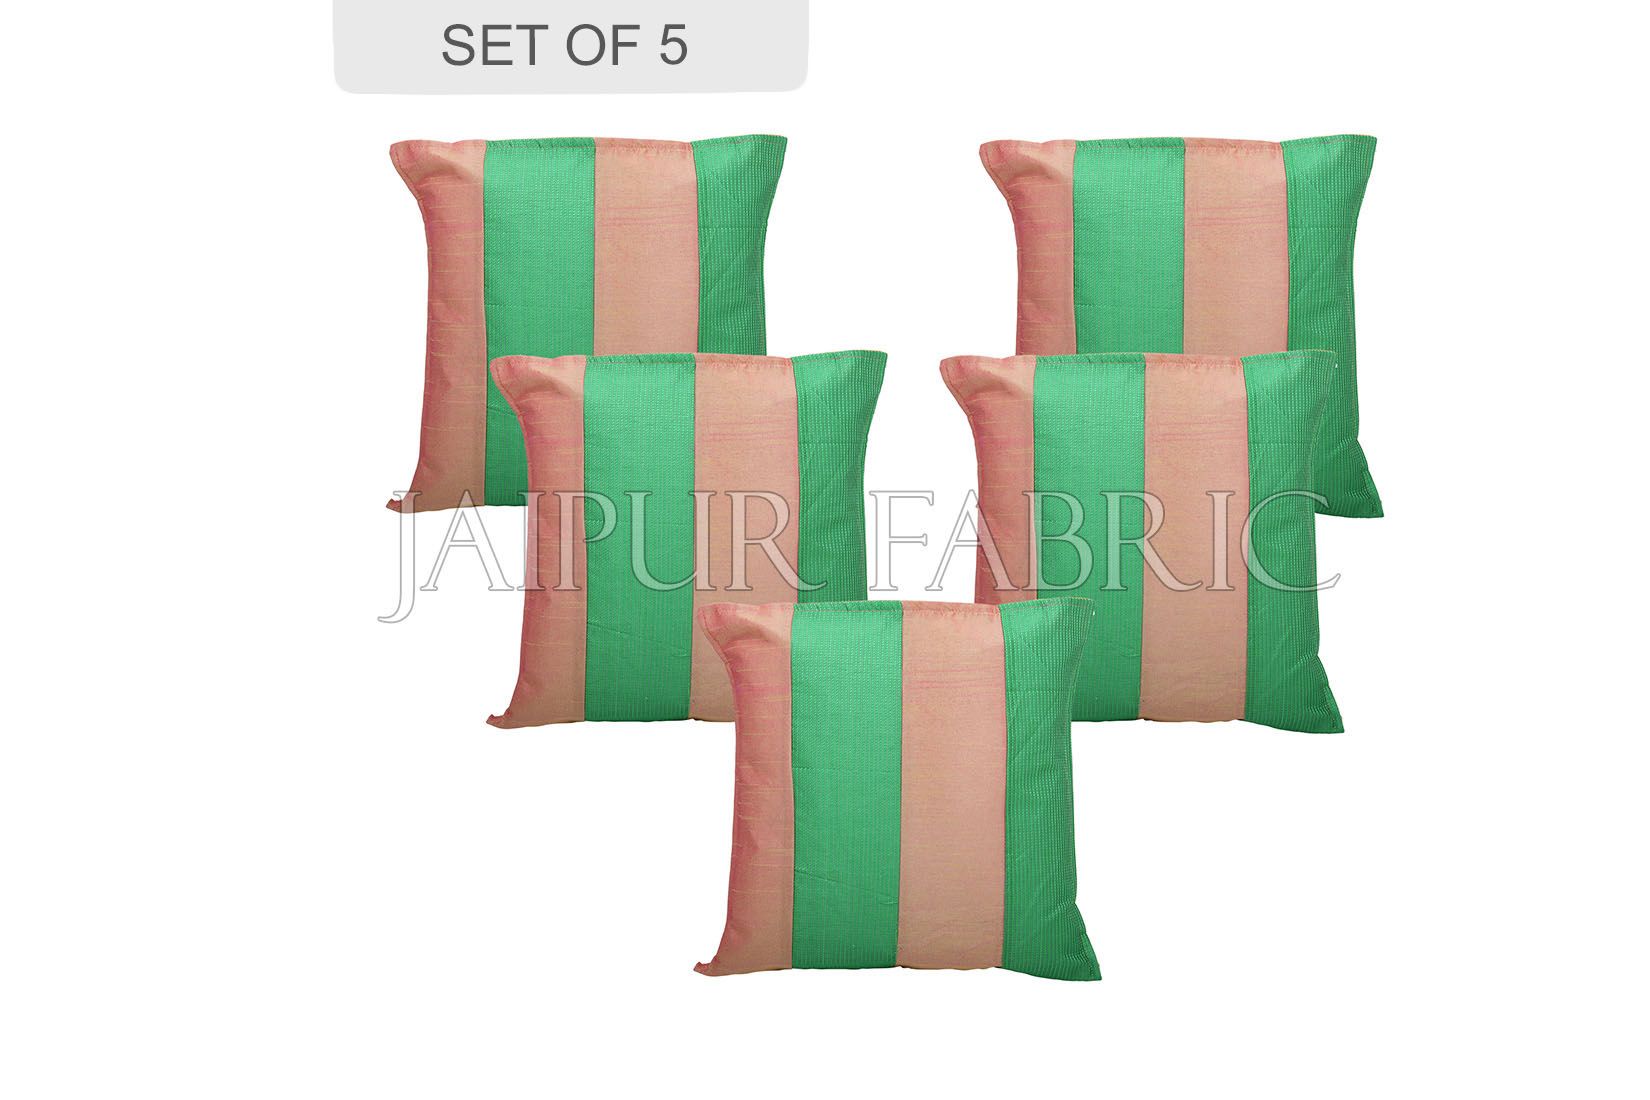 Copper and Green Thread Work Cotton Satin Silk Cushion Cover